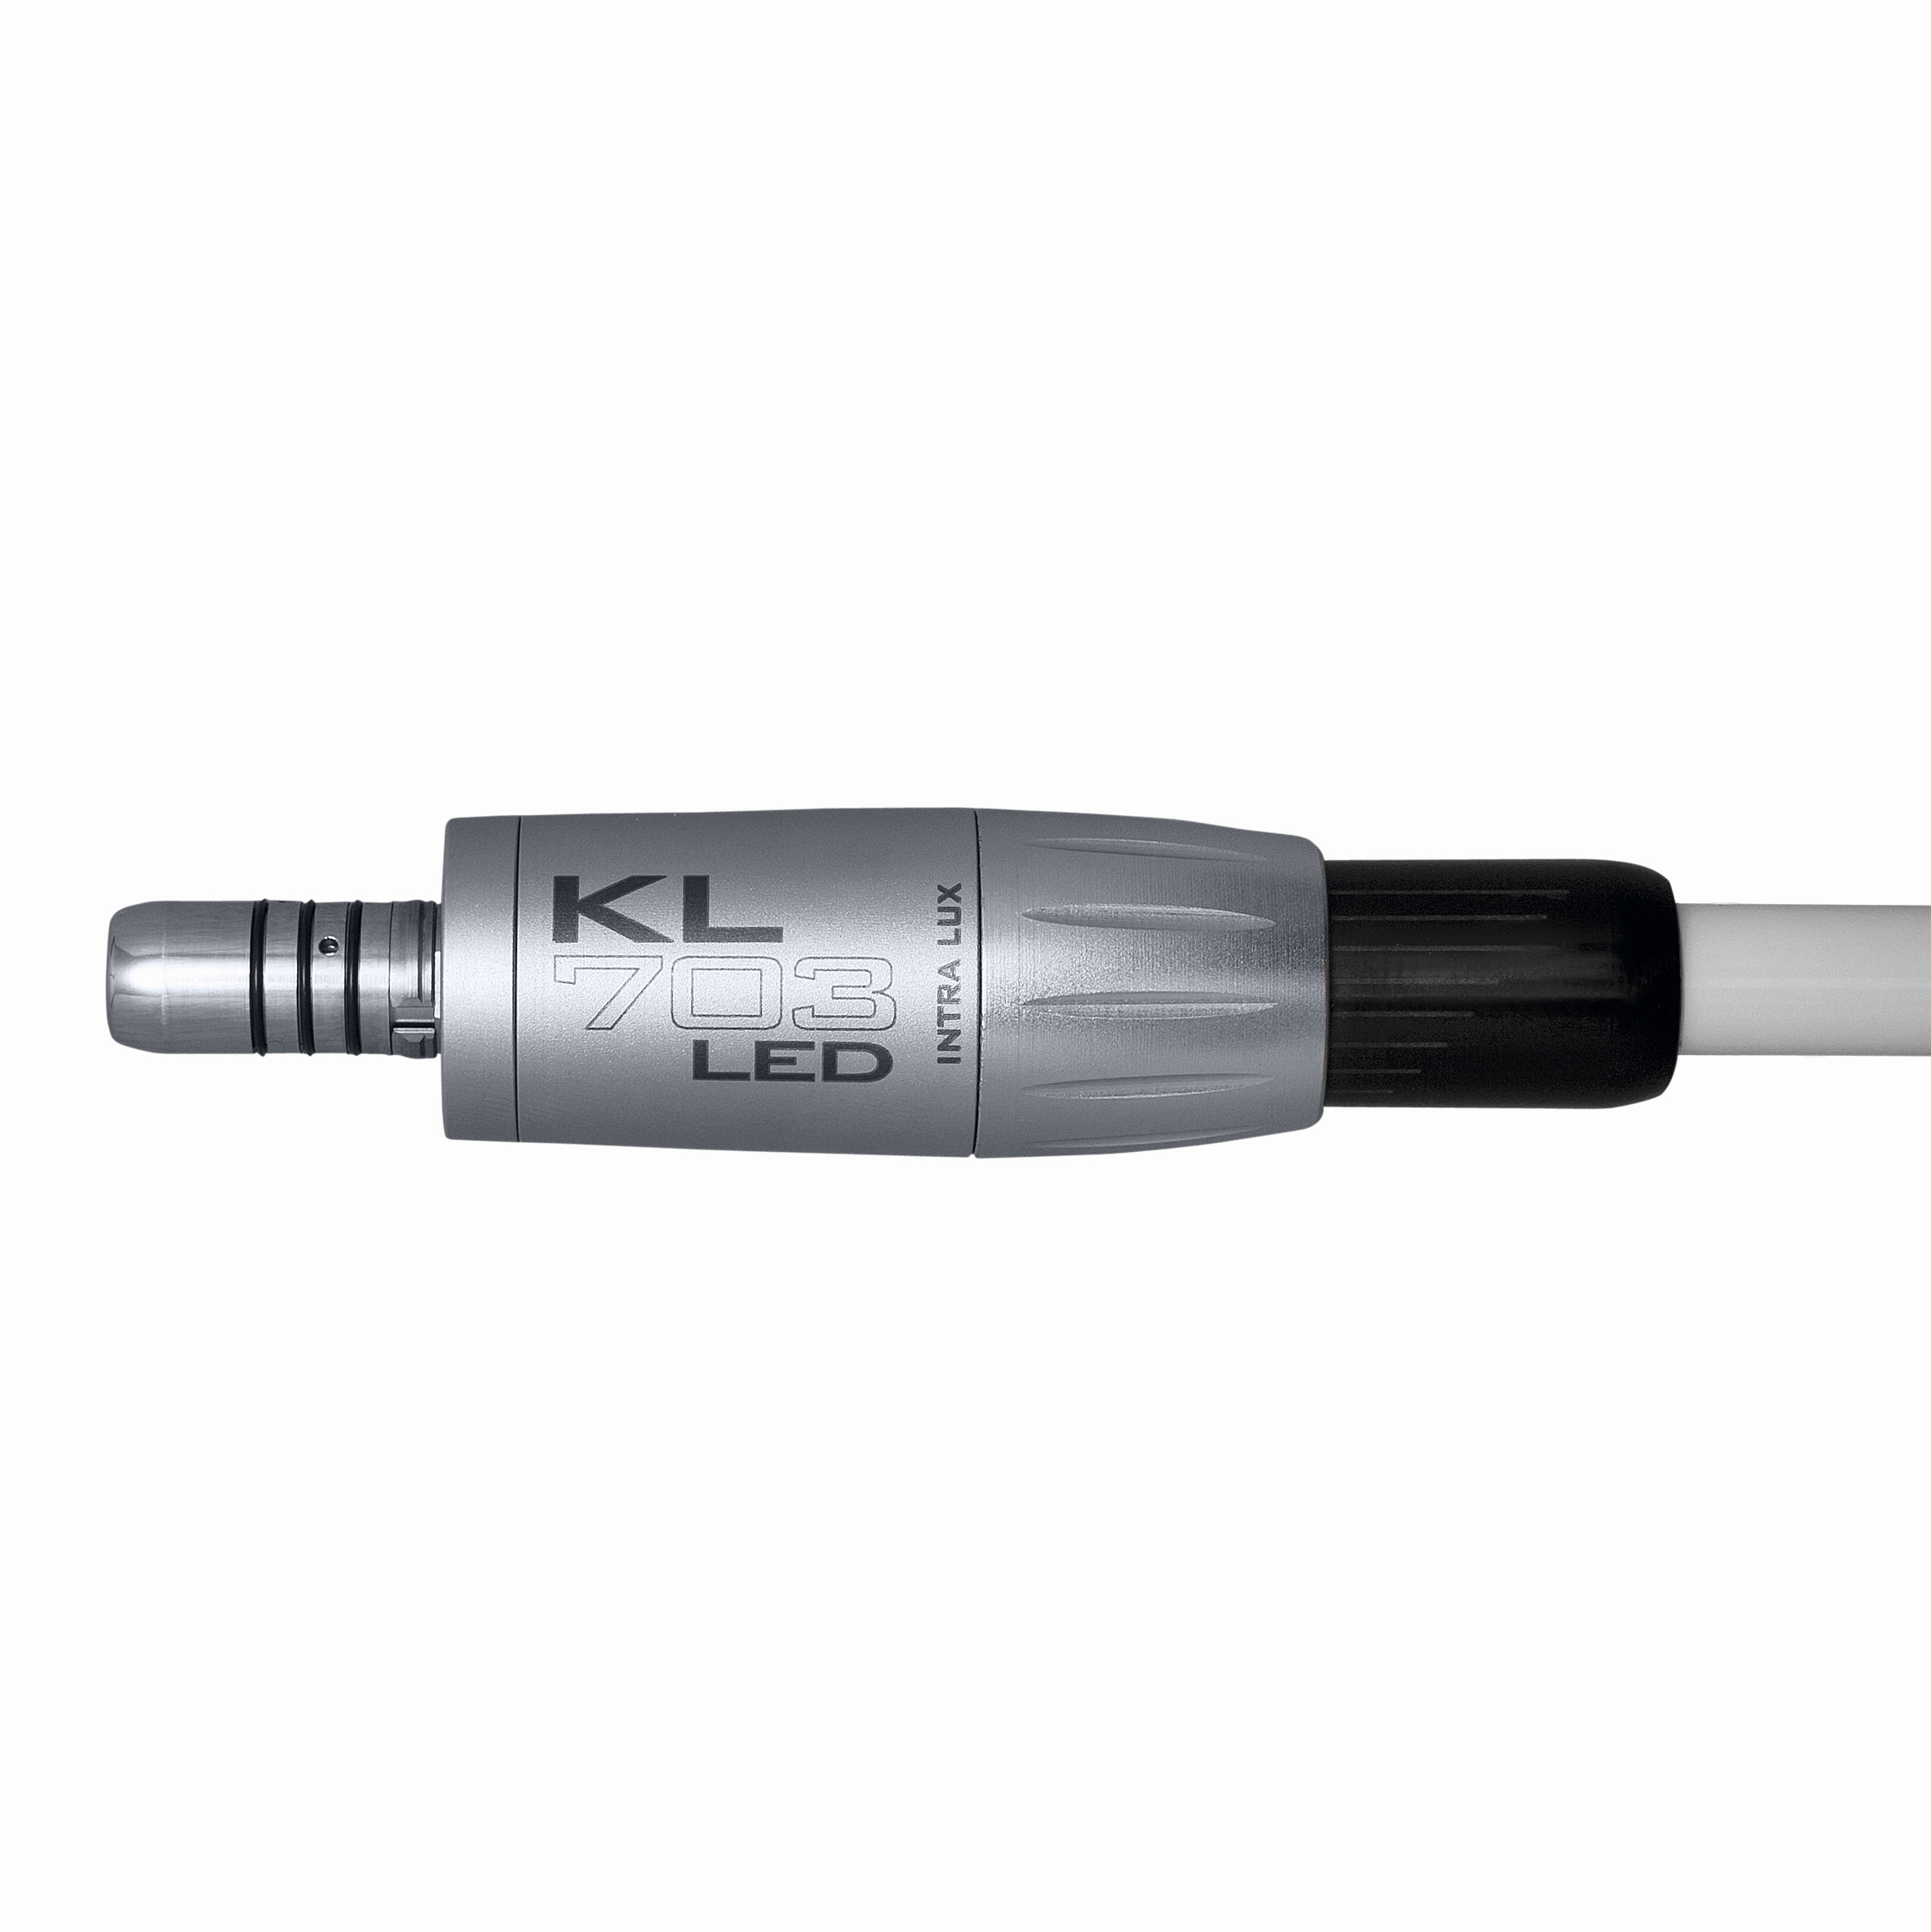 KaVo INTRA KL703 LED Lichtmotor  -  ultra kurz & ultra leicht, bürstenloser DC-Antrieb., 20 - 40000 U/min. | Art.Nr.: 1007.0150